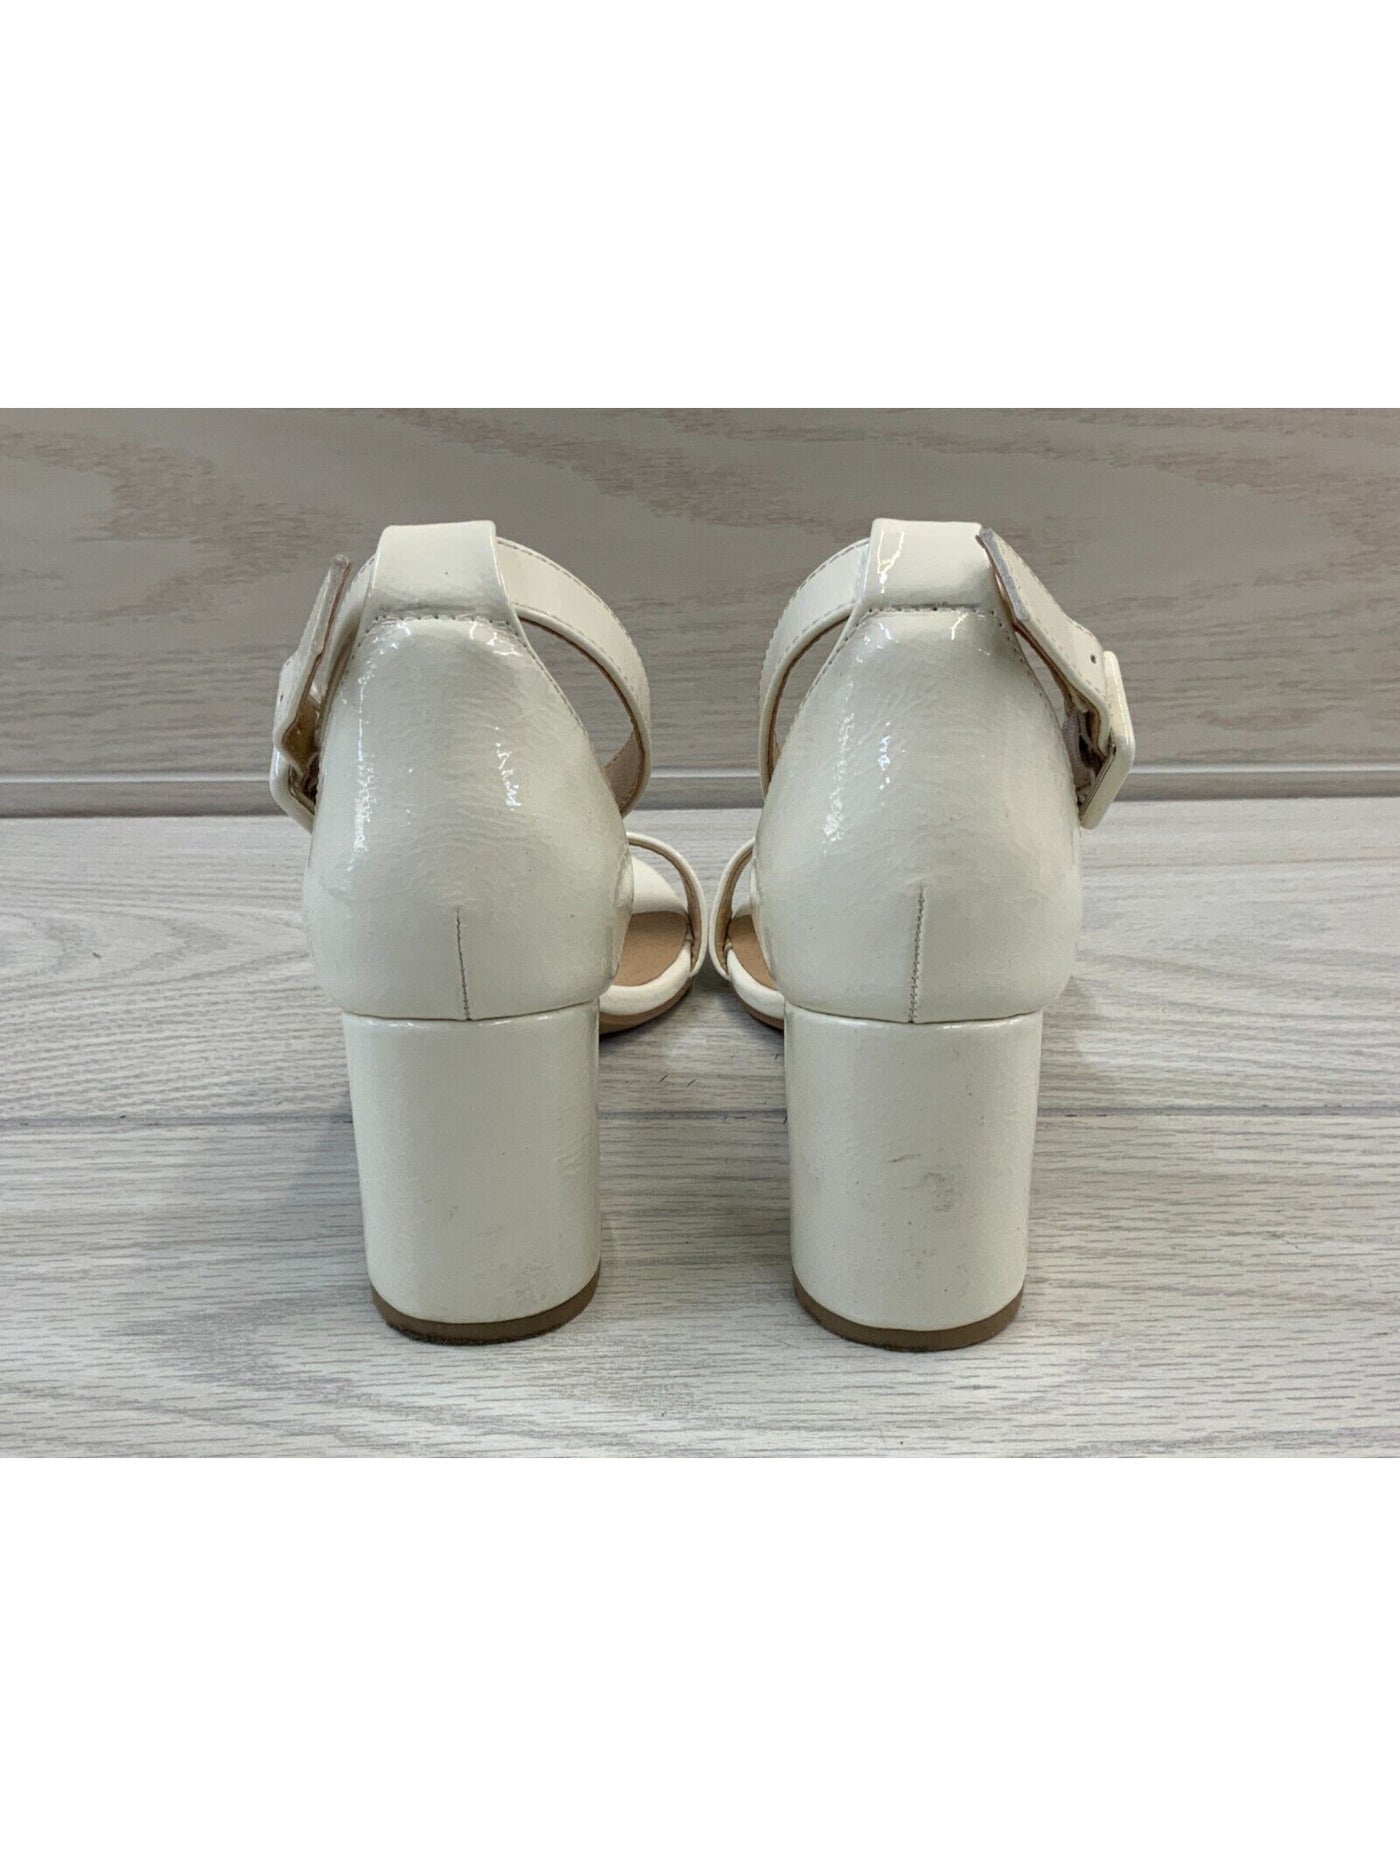 CHINESE LAUNDRY Womens White Adjustable Ankle Strap Jody Open Toe Block Heel Buckle Dress Heeled Sandal 8.5 M